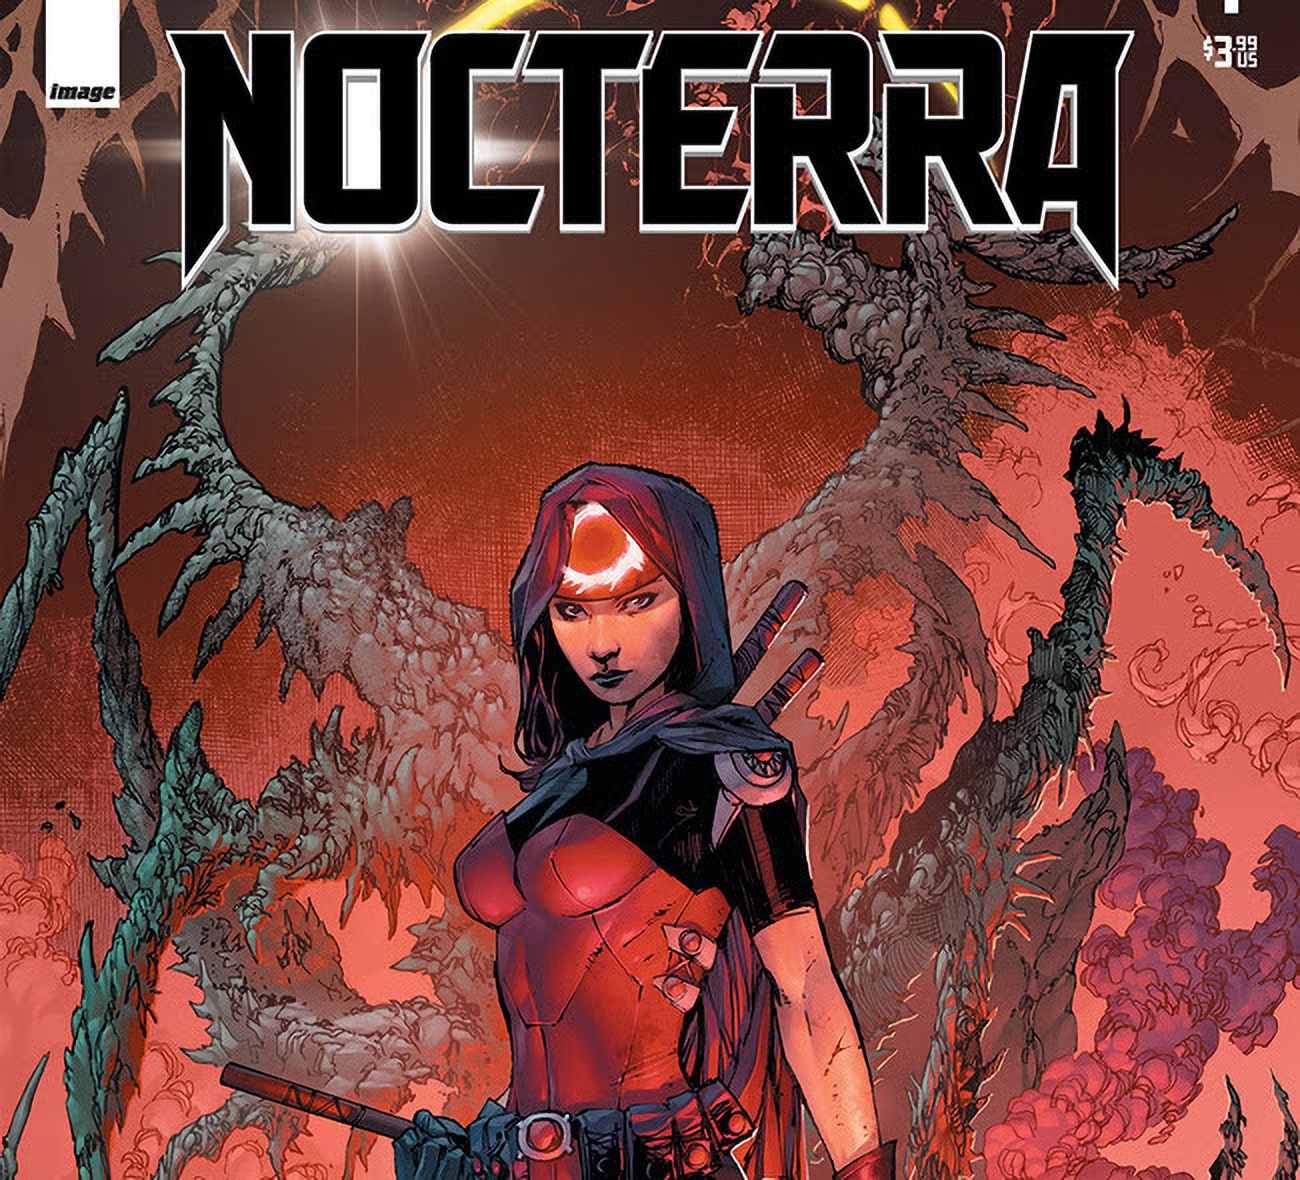 Image Comics sets March 2021 for Scott Snyder & Tony S. Daniel's 'Nocterra'